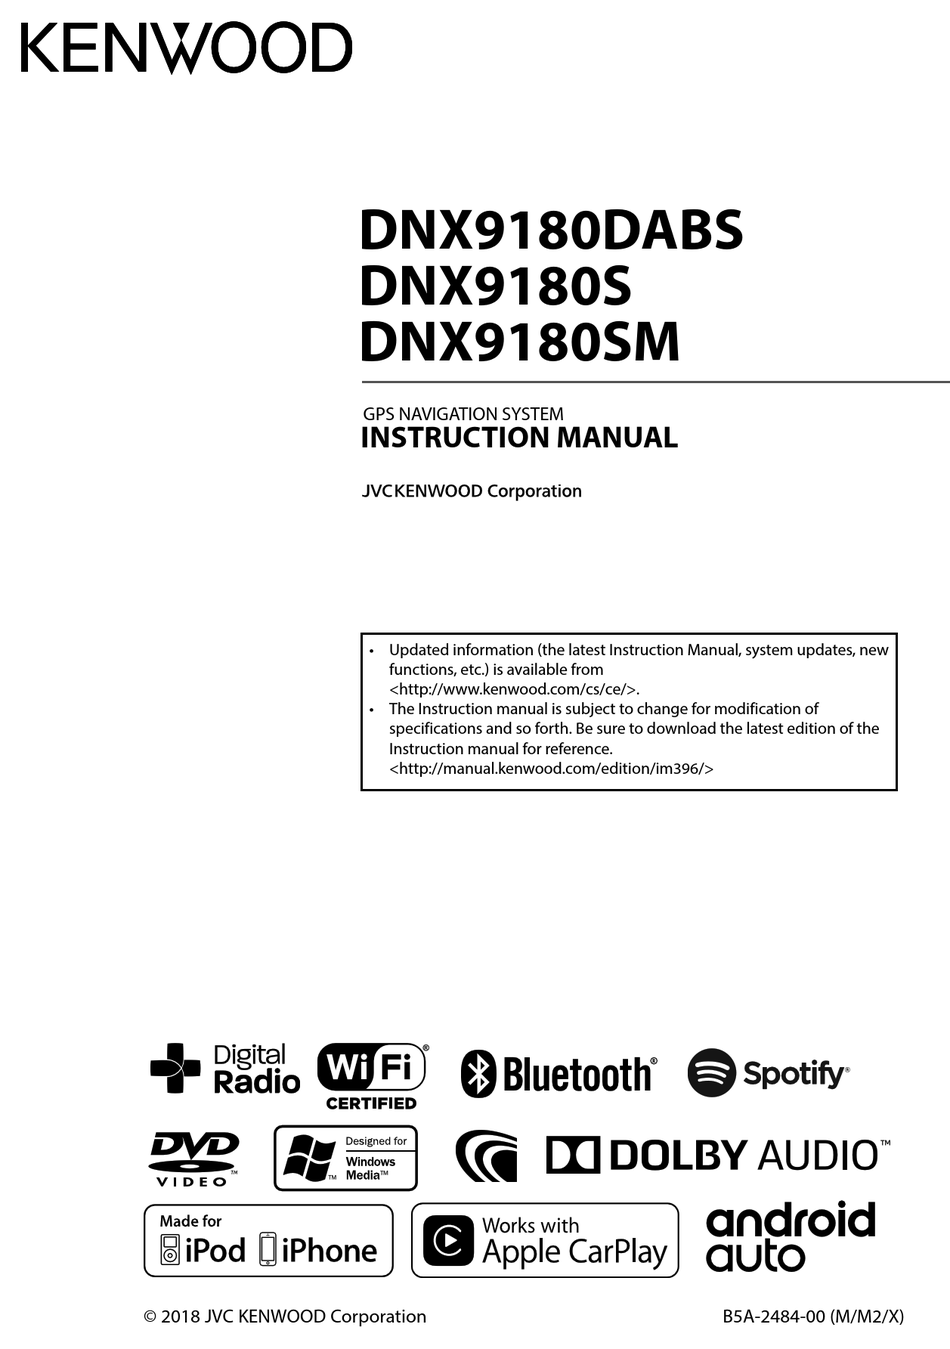 Kenwood Dnx9180dabs Instructions Manual Pdf Download Manualslib